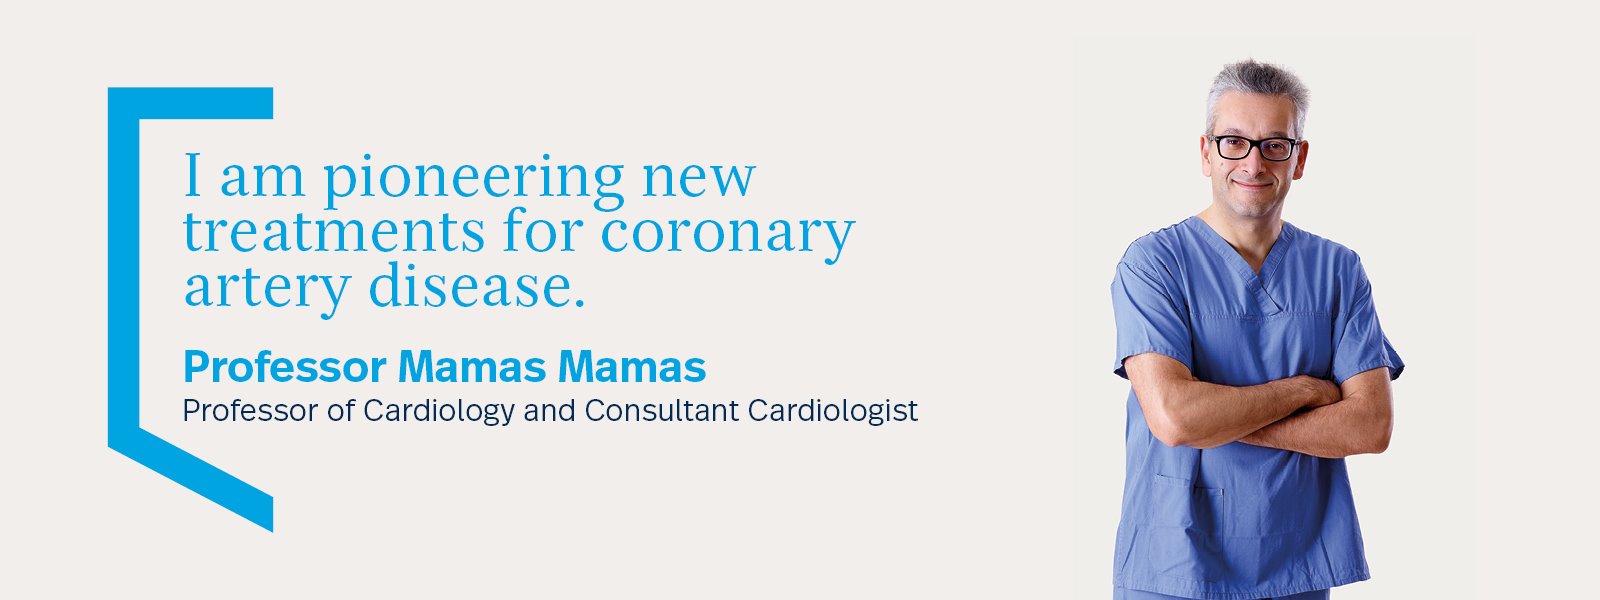 Professor Mamas Mamas, Professor of Cardiology and Consultant Cardiologist